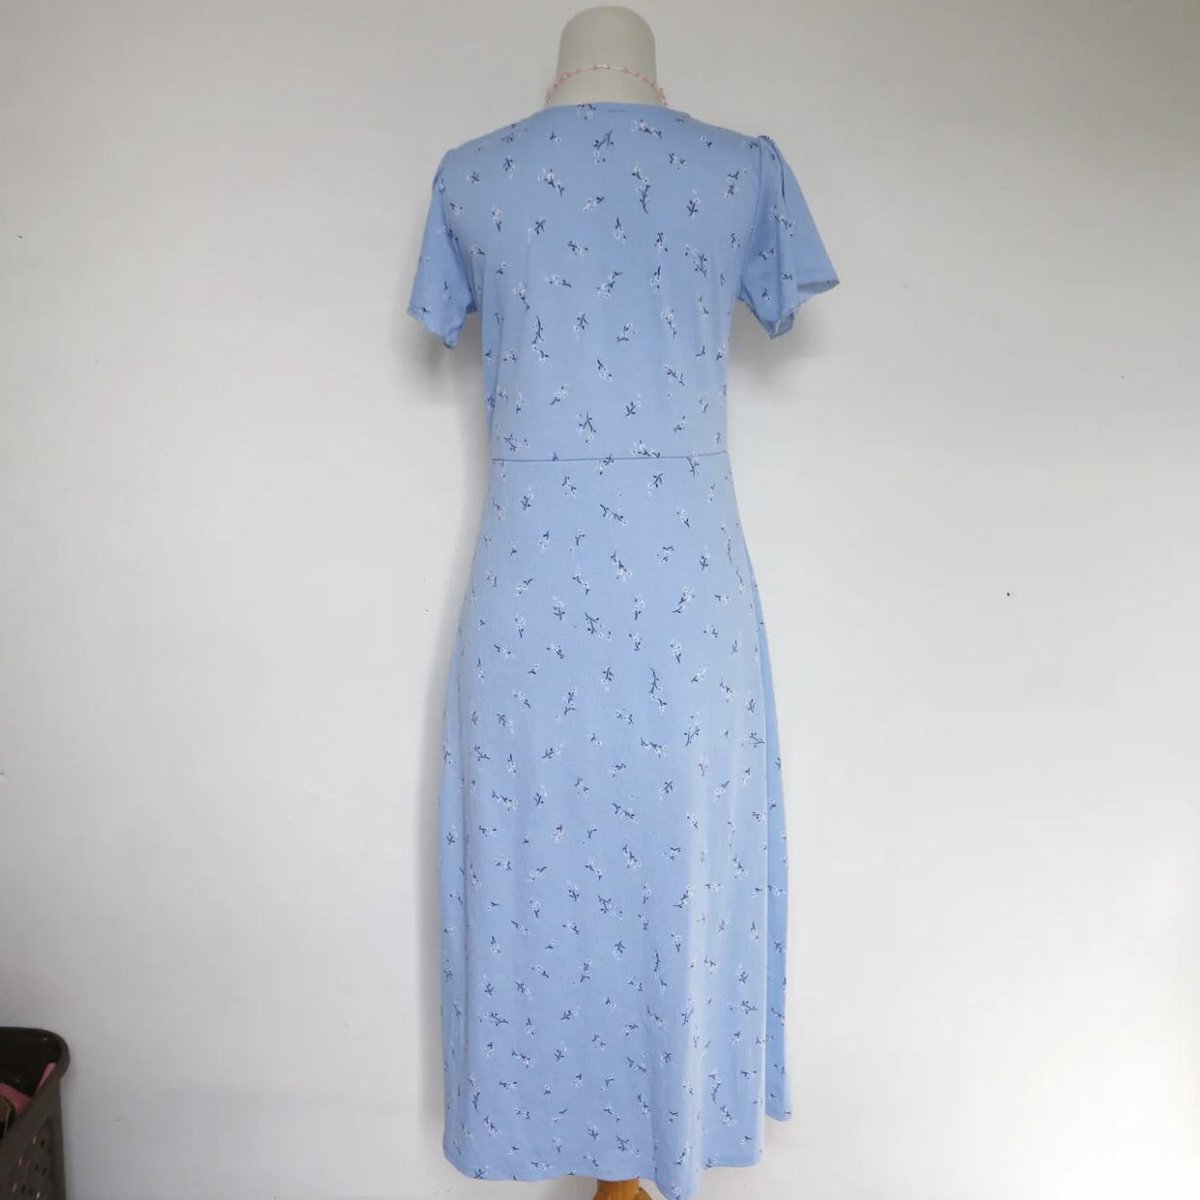 Midi Dress Cotton On Biru Original

! FIRST PAY FIRST GET !
100% ORIGINAL

Condition: Like New
Size: M (P 116cm, L 48cm “toleransi 1-2cm”)
Location: Semarang
Price: IDR Rp.139,900

[ Consignment ]

aratapreloved.crd.co

#ArataPreloved #cottonon #mididress #dress #zonajajan